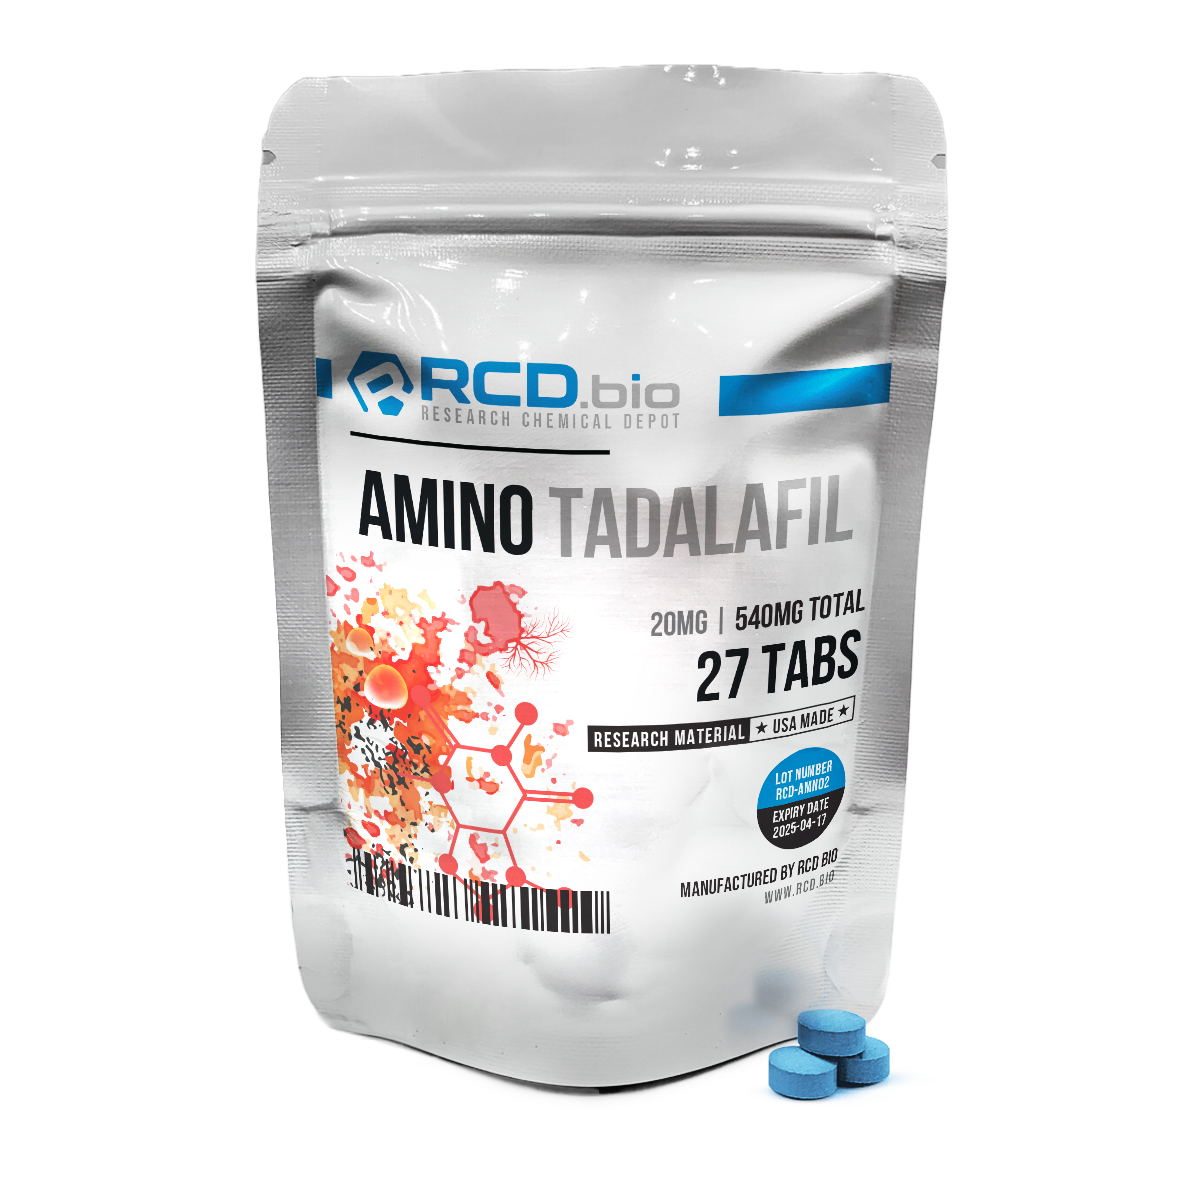 Amino Tadalafil Tablets For Sale in USA | Fast Shipping | RCD.bio